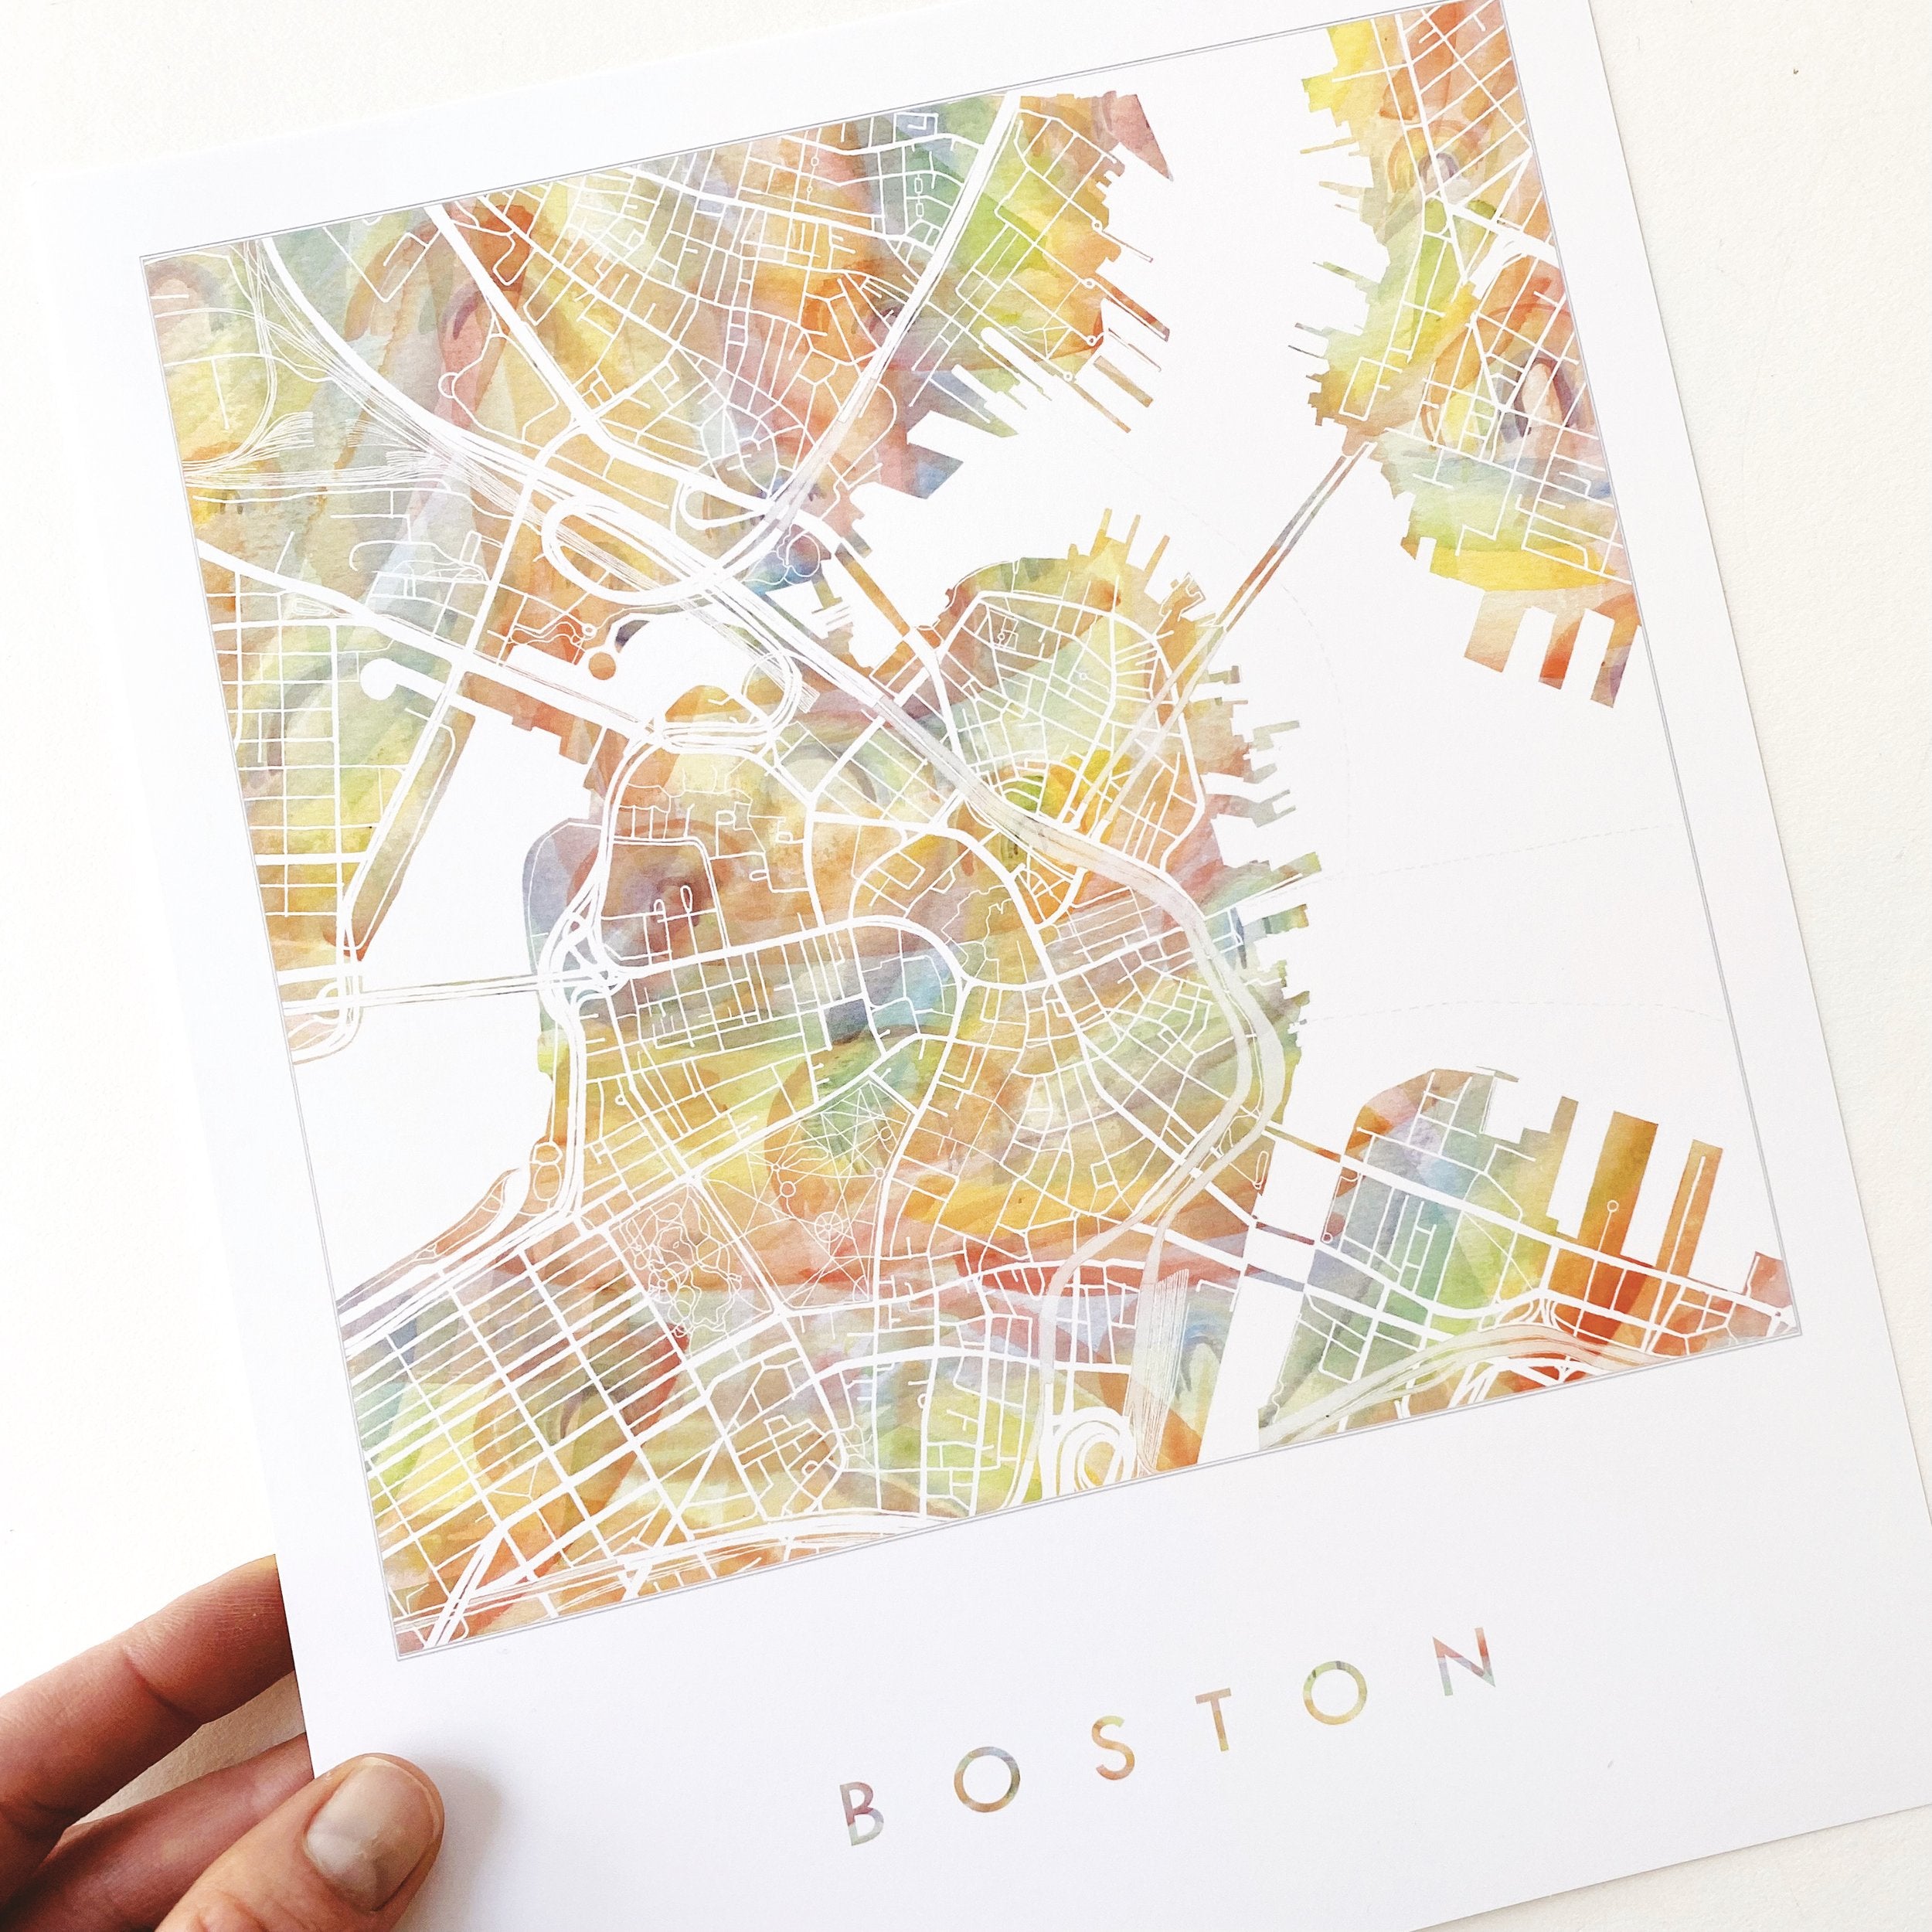 BOSTON Pride Rainbow Watercolor Map: PRINT